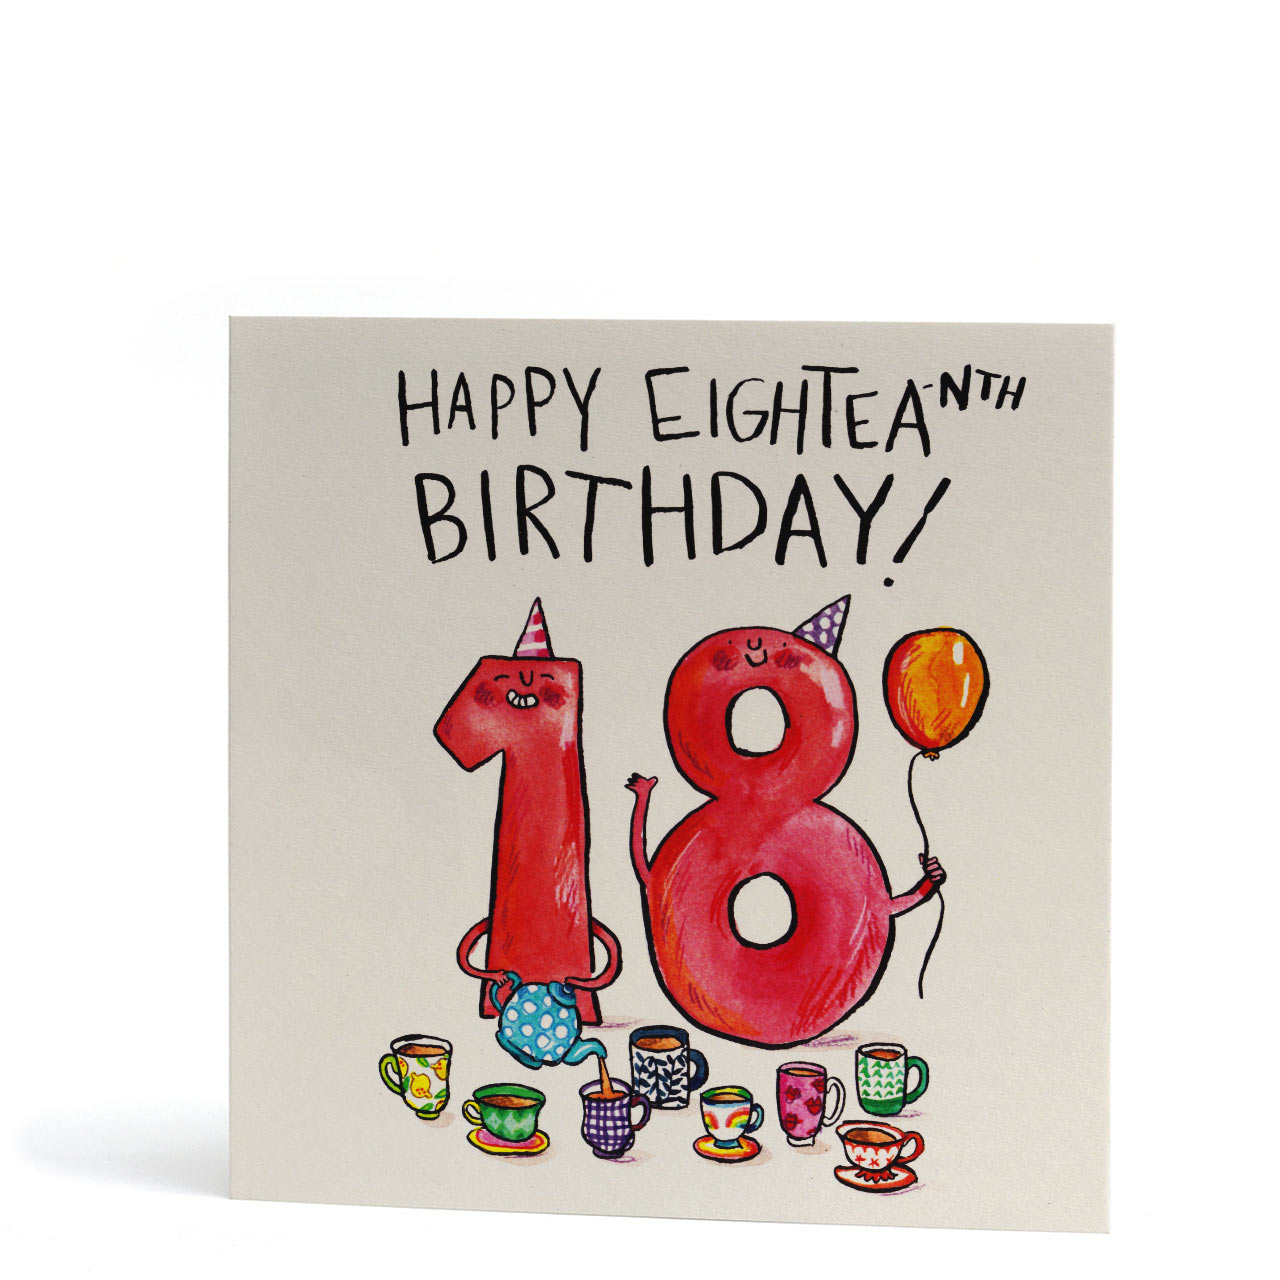 Happy Eigh-tea-nth Birthday Card